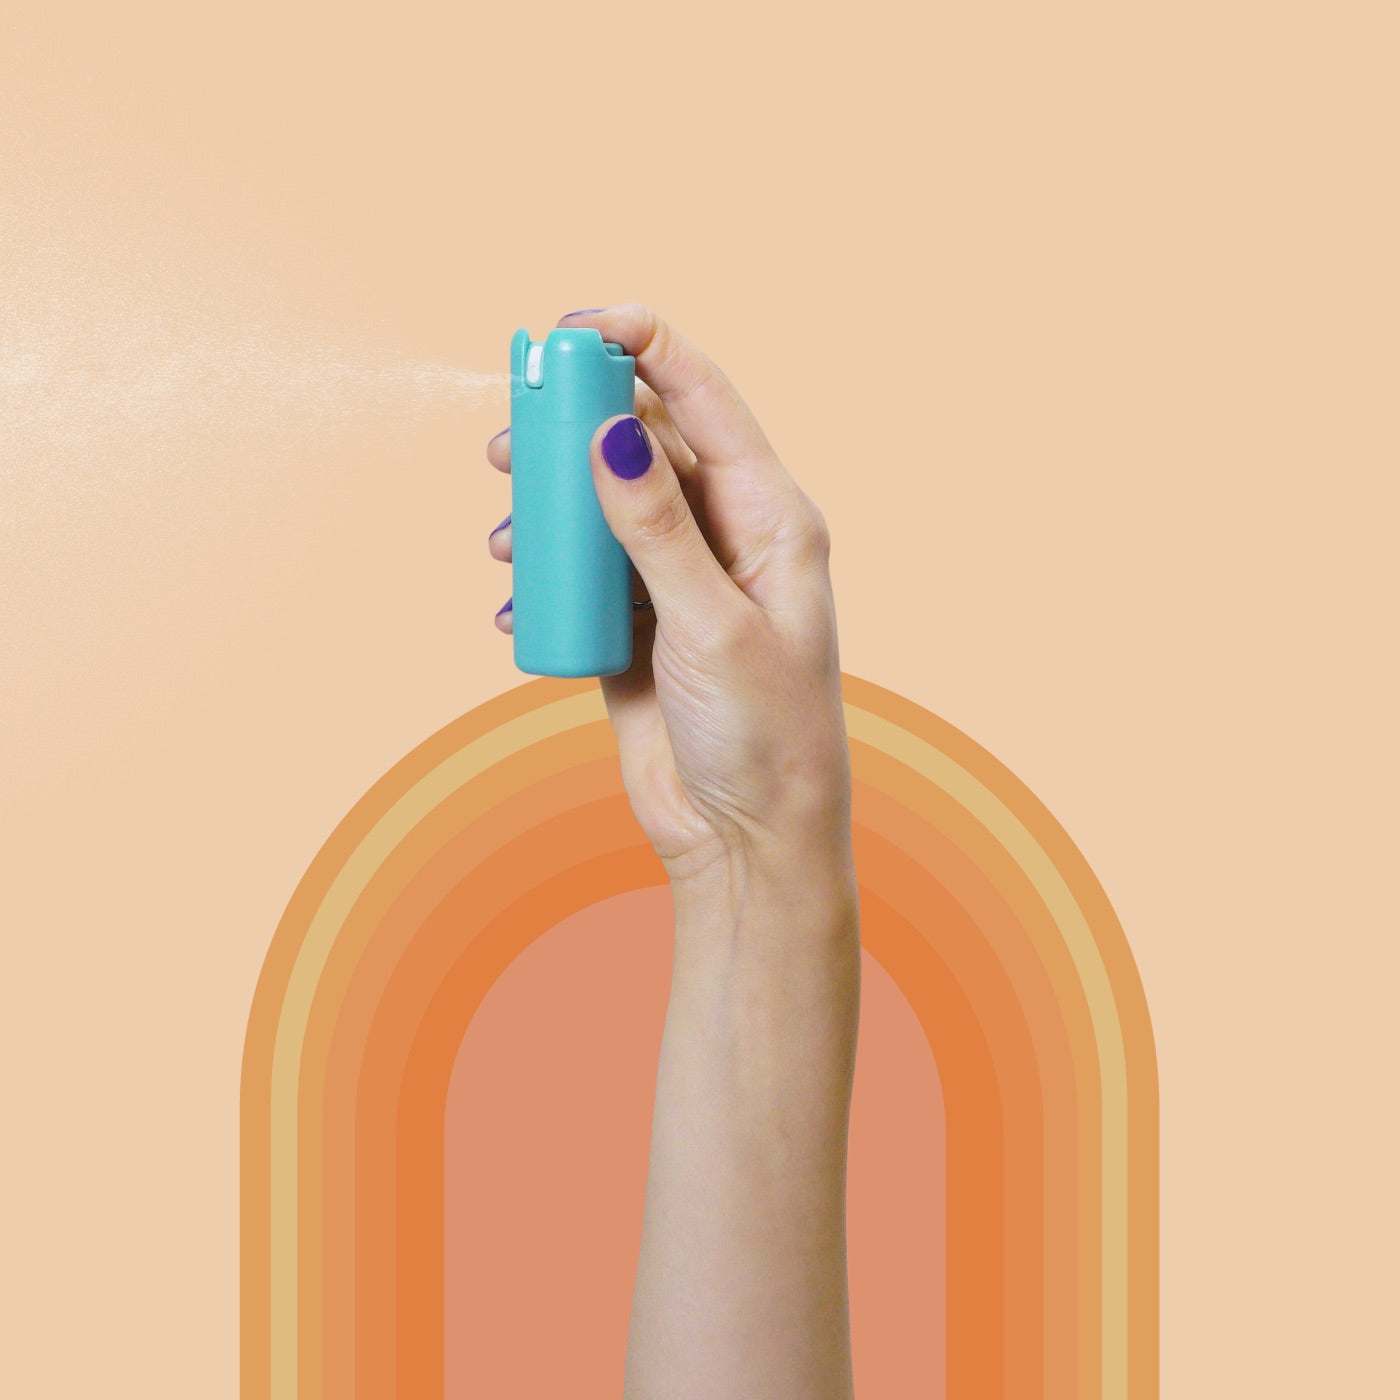 A hand holds a Sanikind sanitizer dispenser against an orange background.